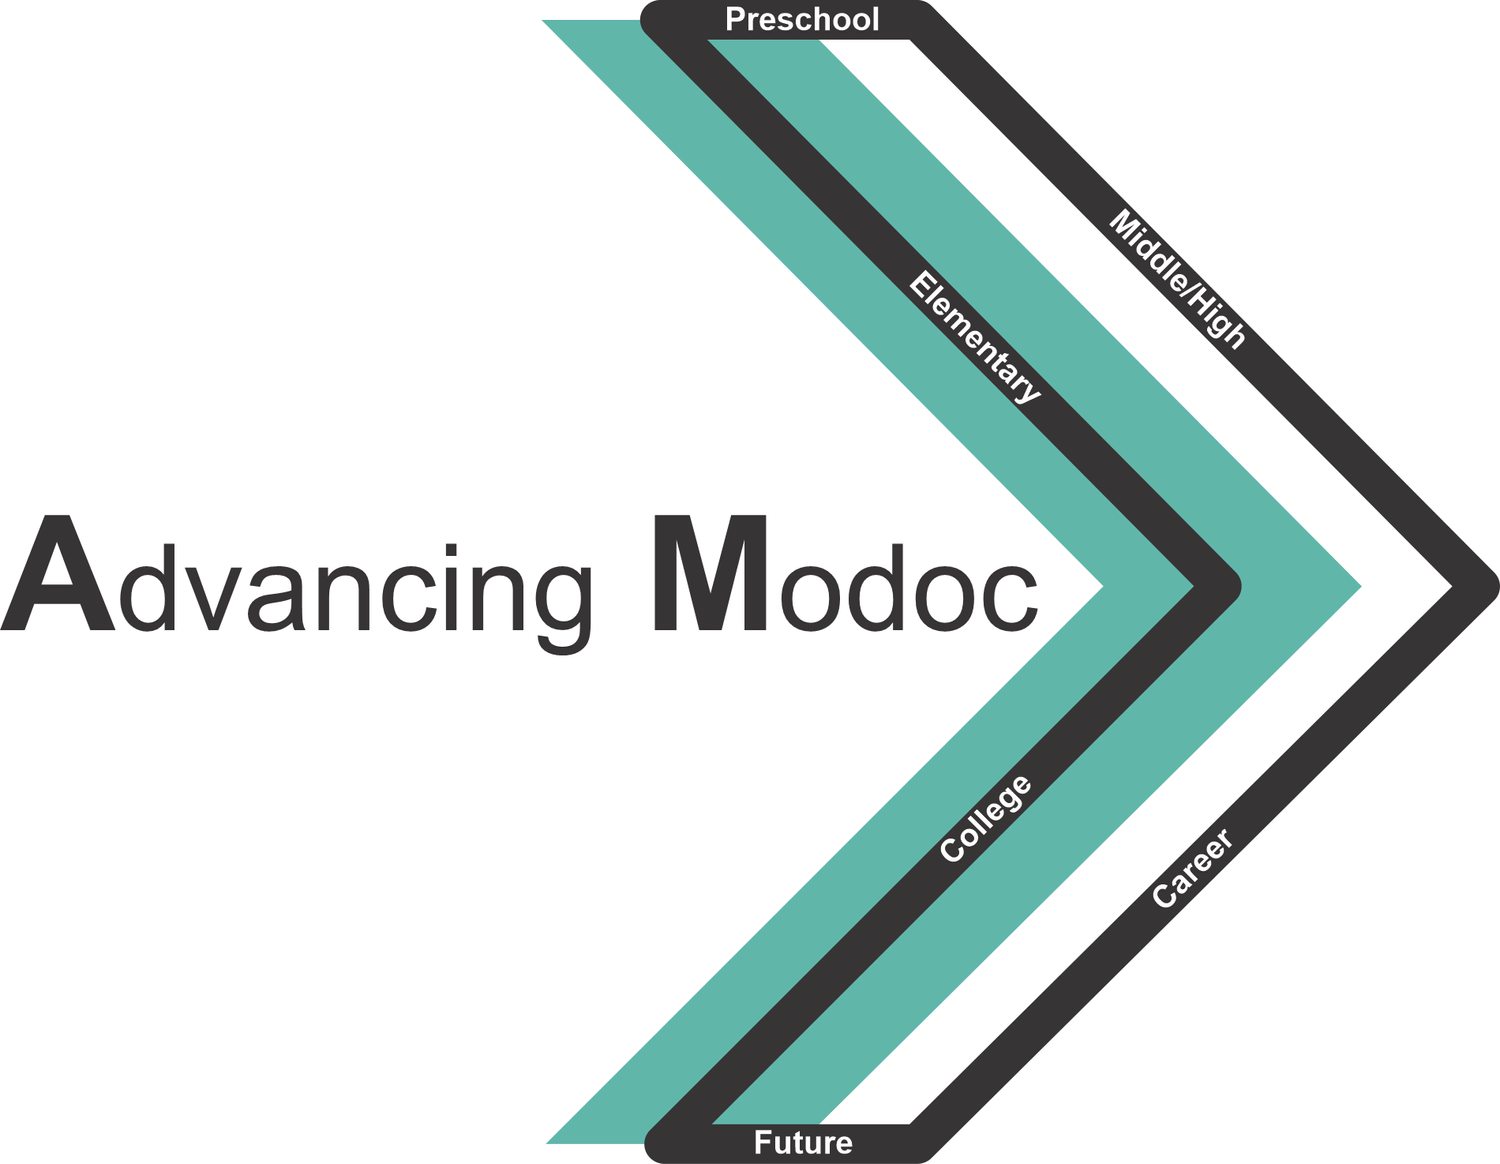 Advancing Modoc